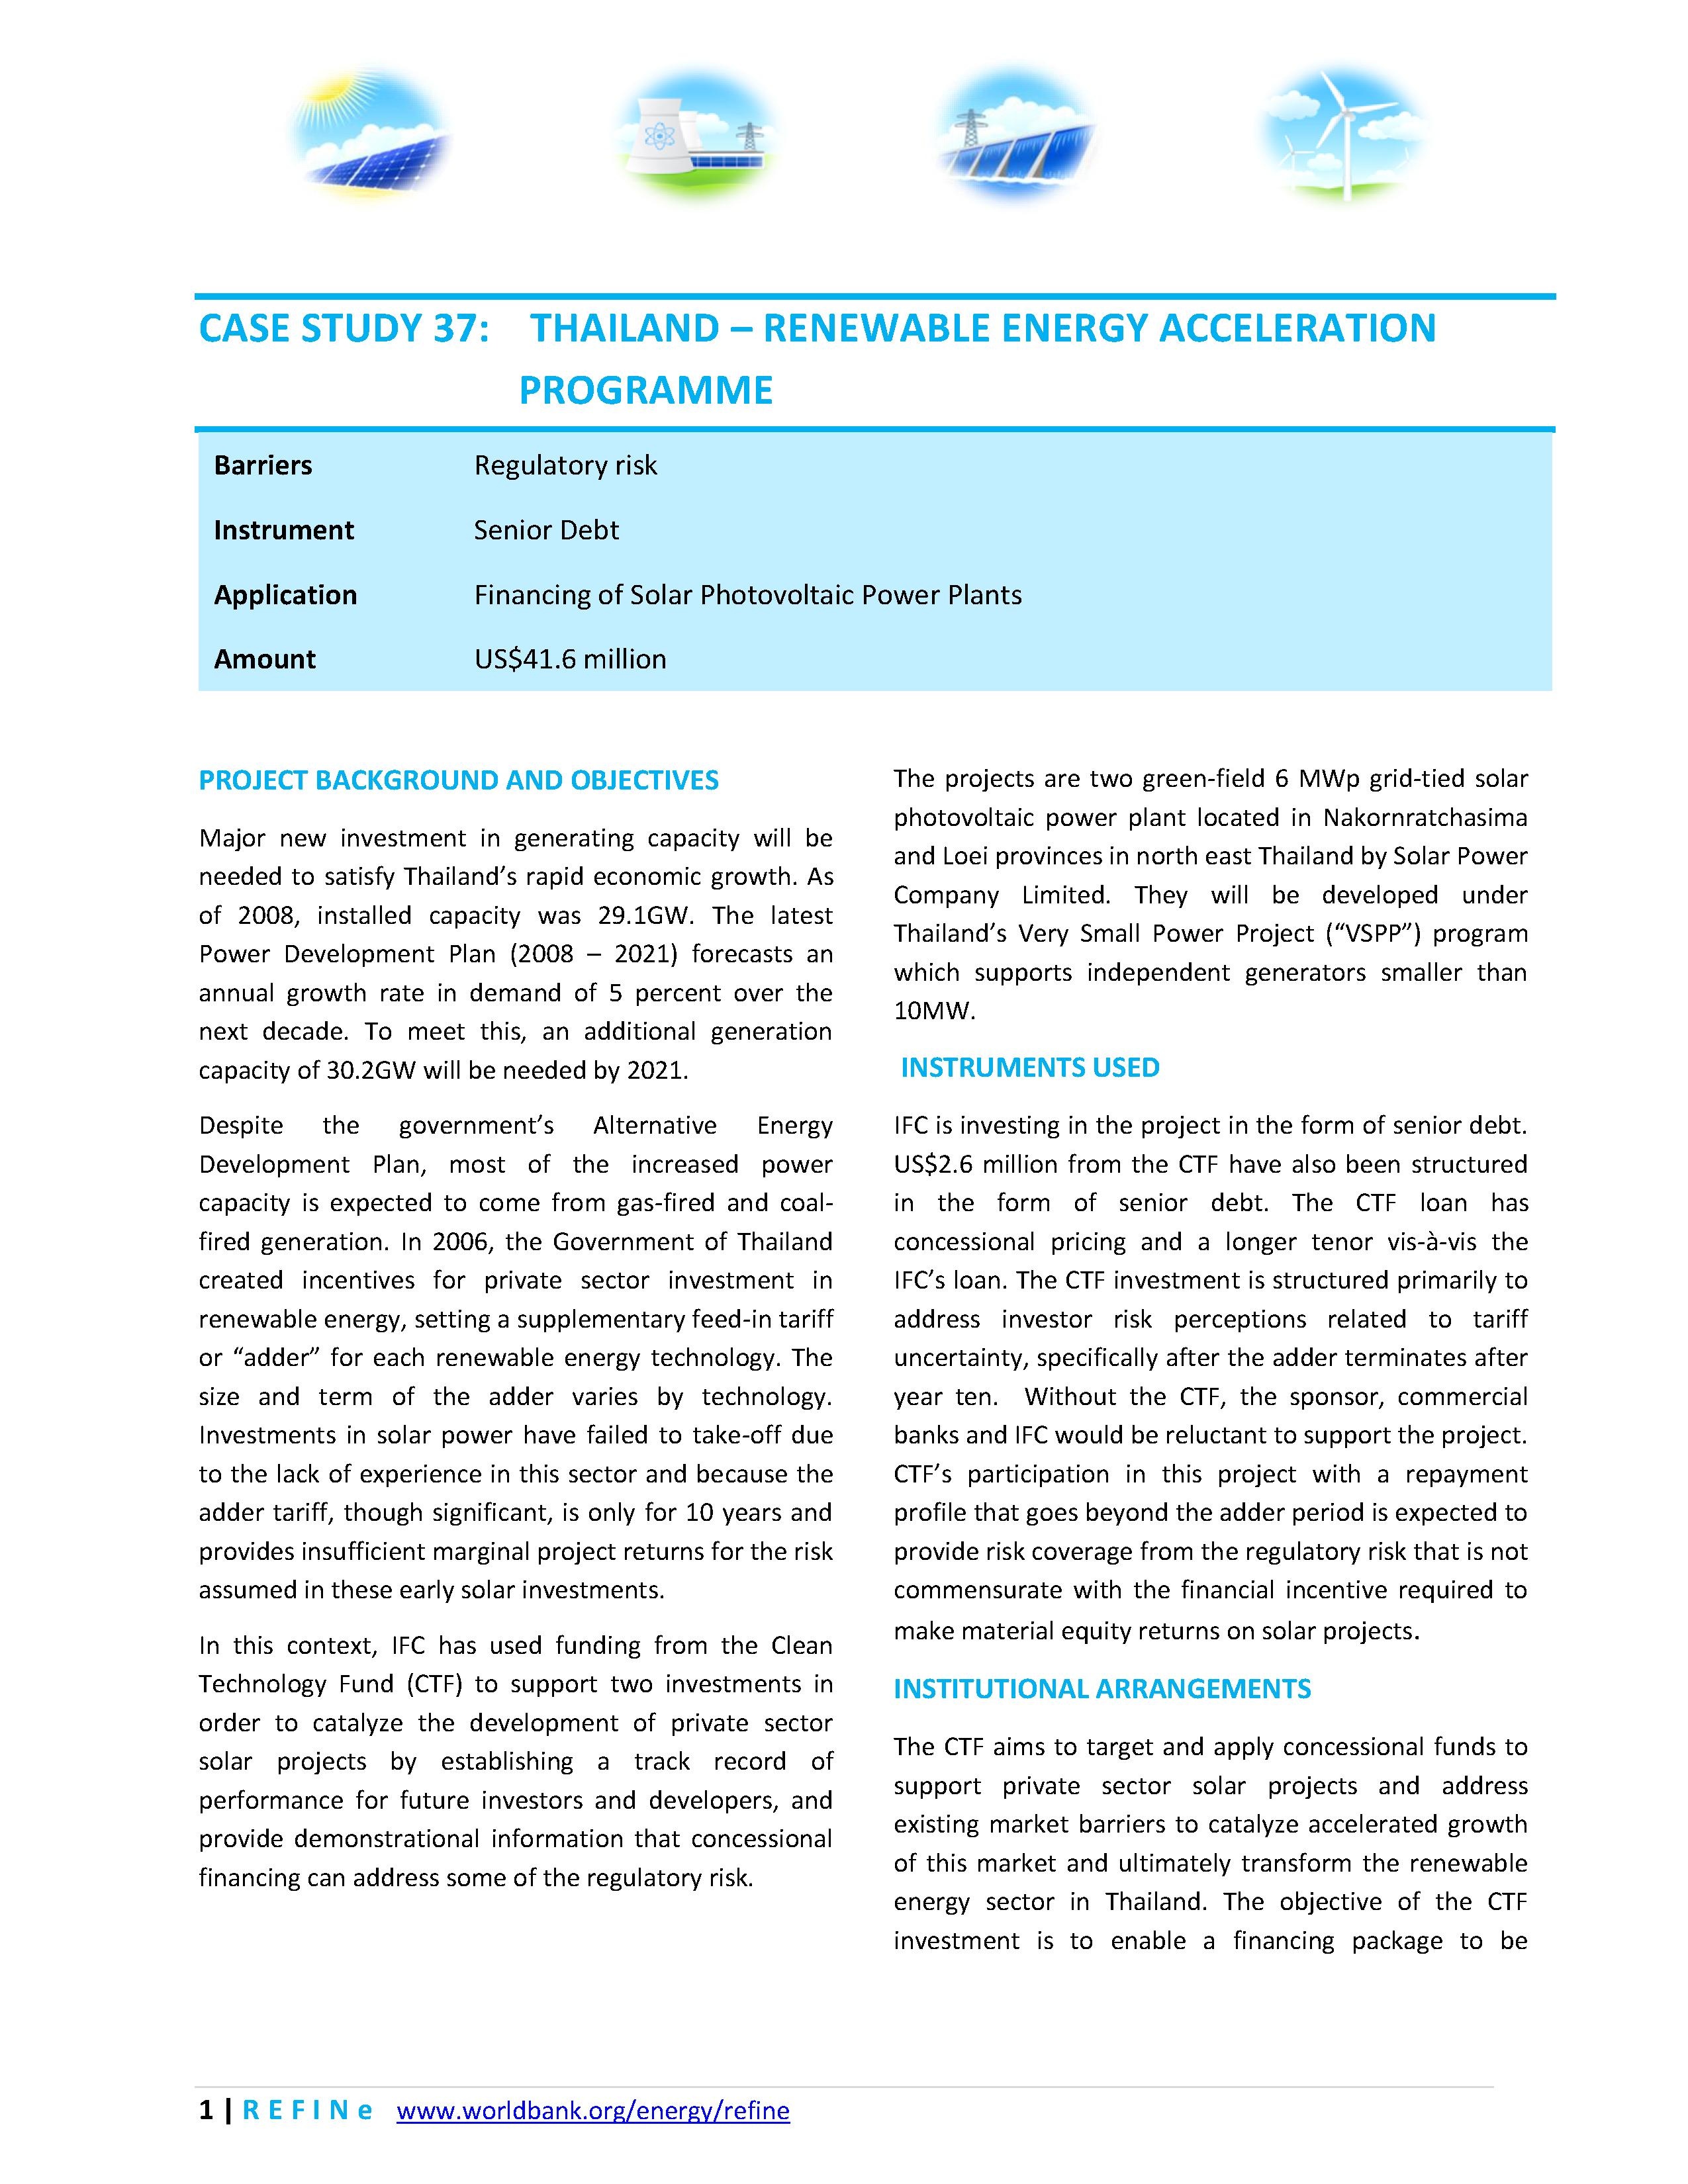 File:Thailand - Renewable Energy Accelerator Program.pdf